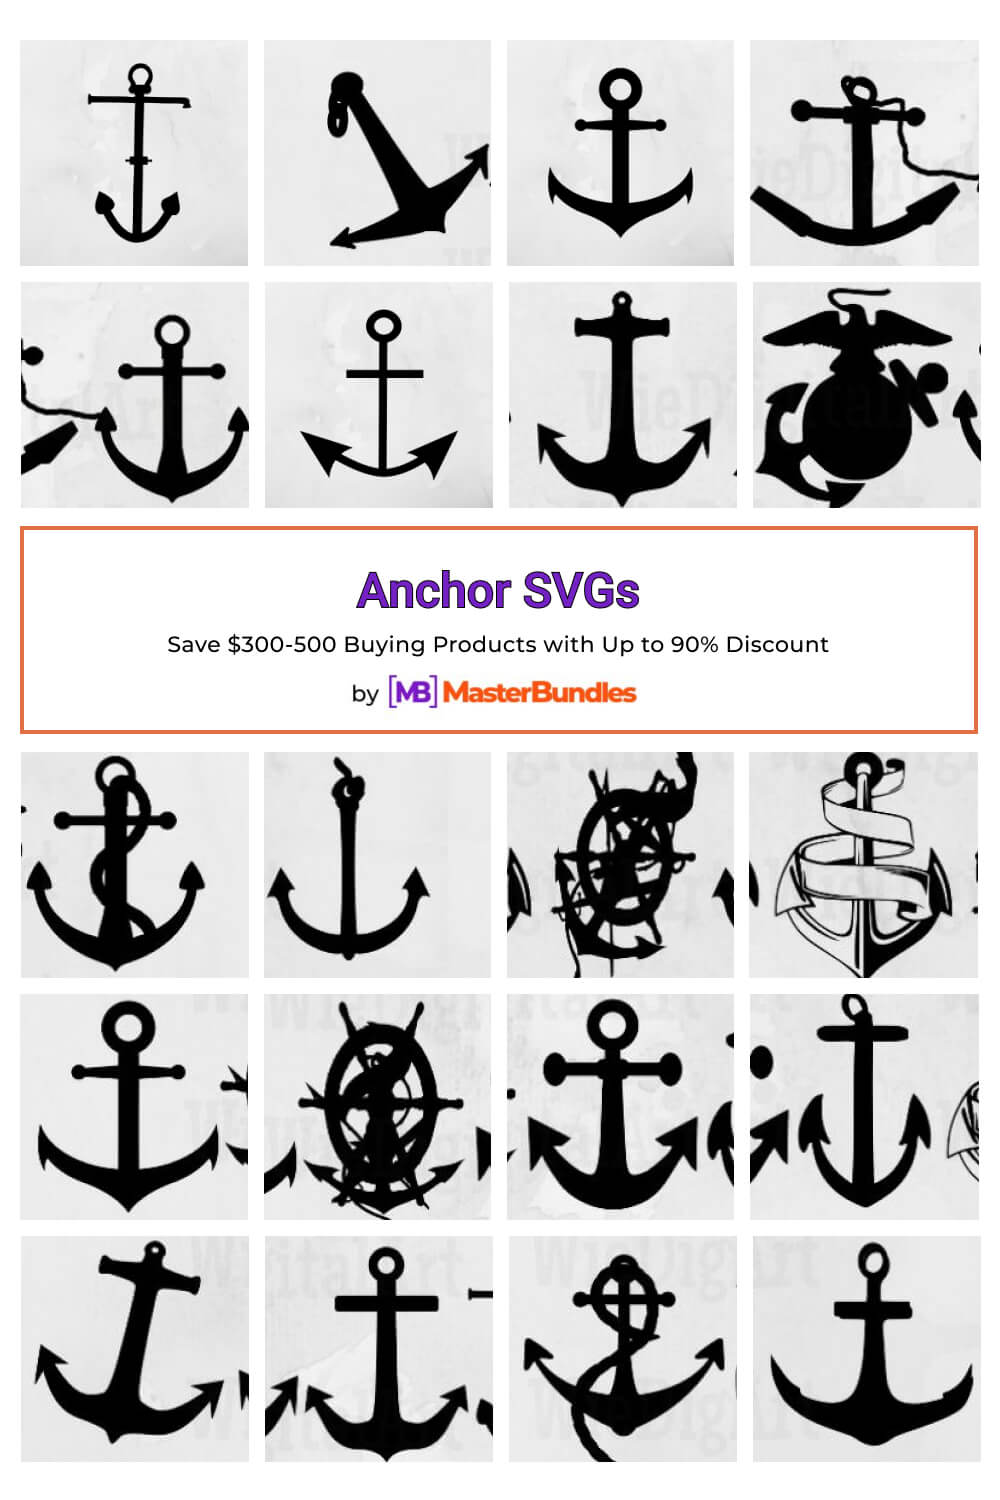 anchor svgs pinterest image.